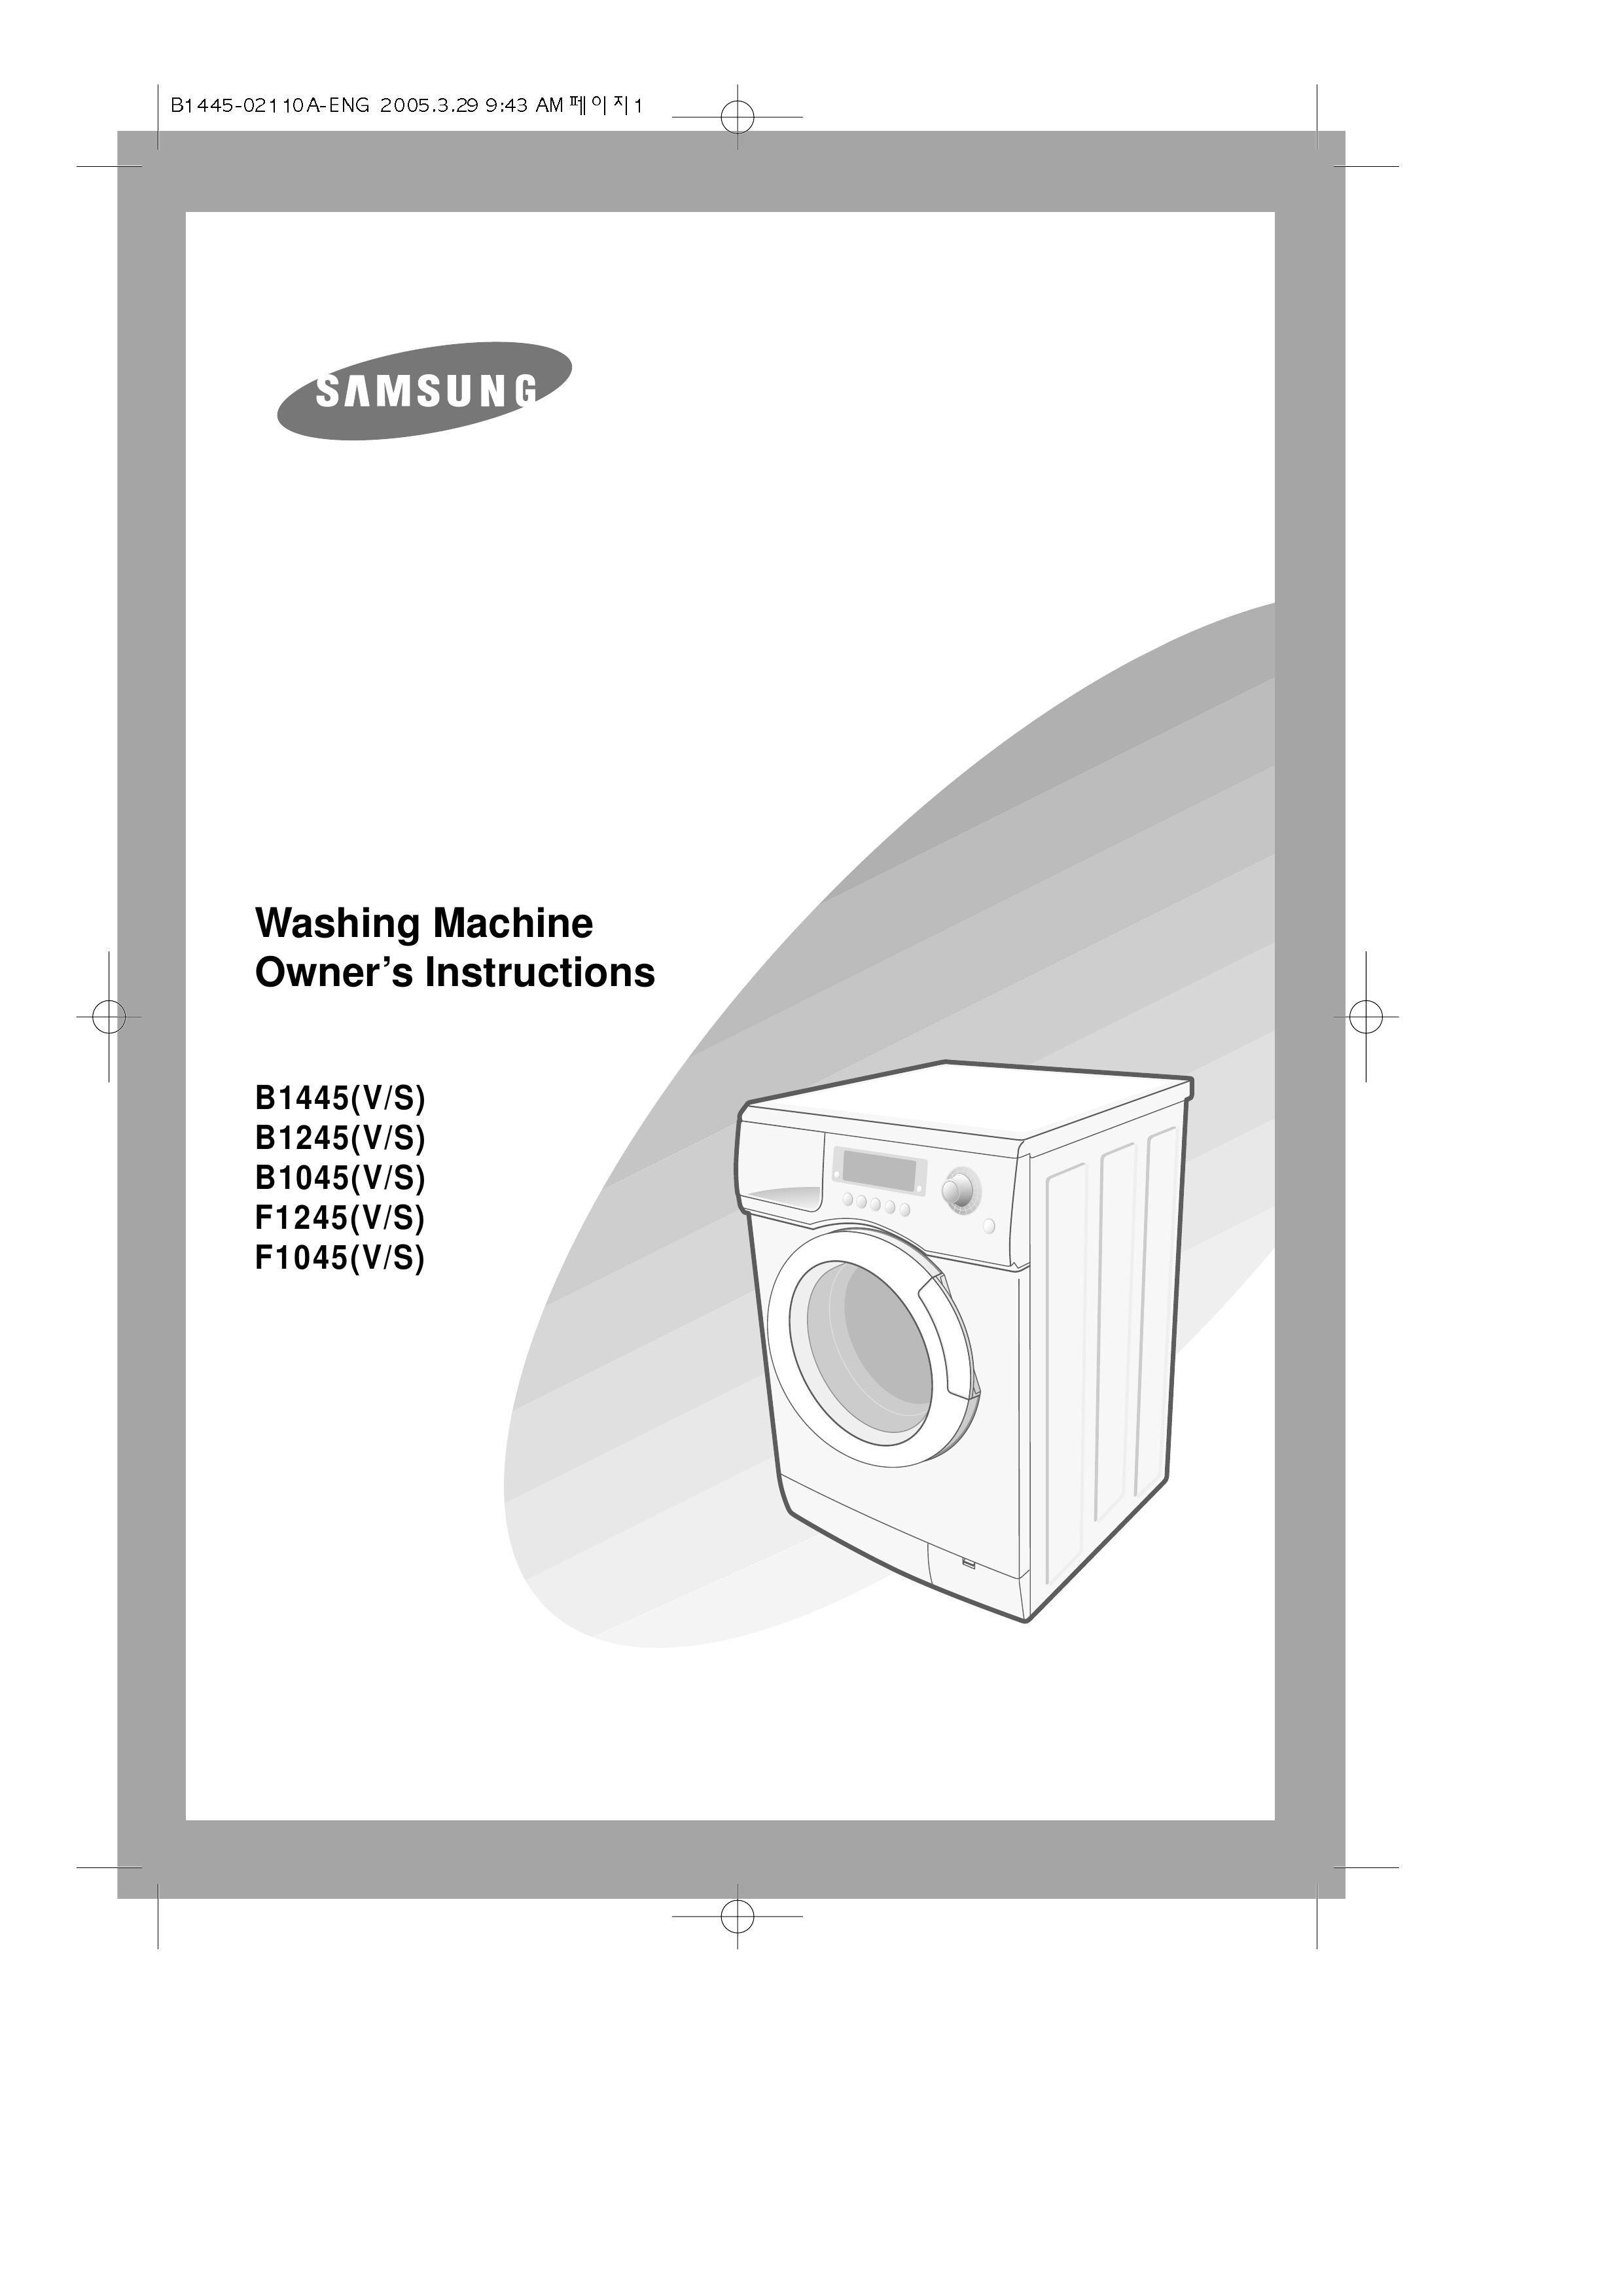 Samsung B1245(V/S) Washer User Manual